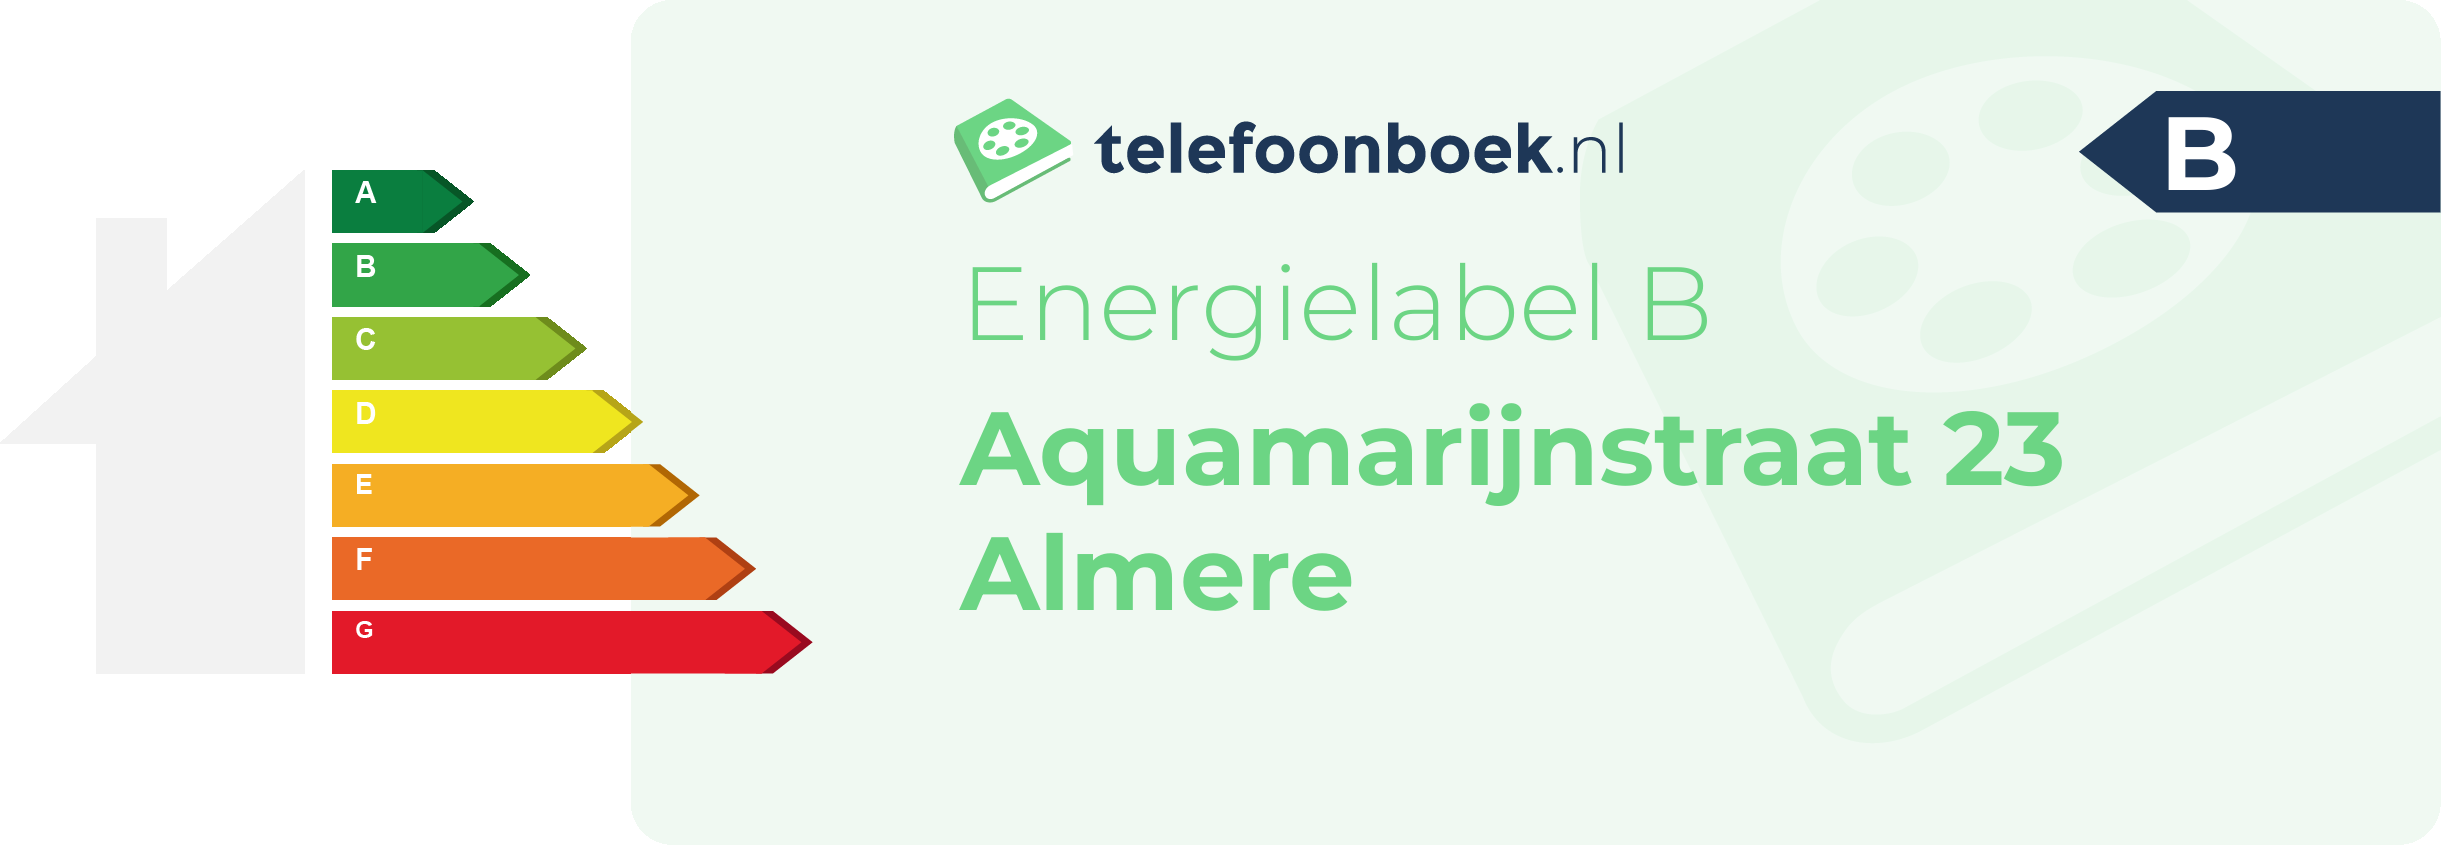 Energielabel Aquamarijnstraat 23 Almere